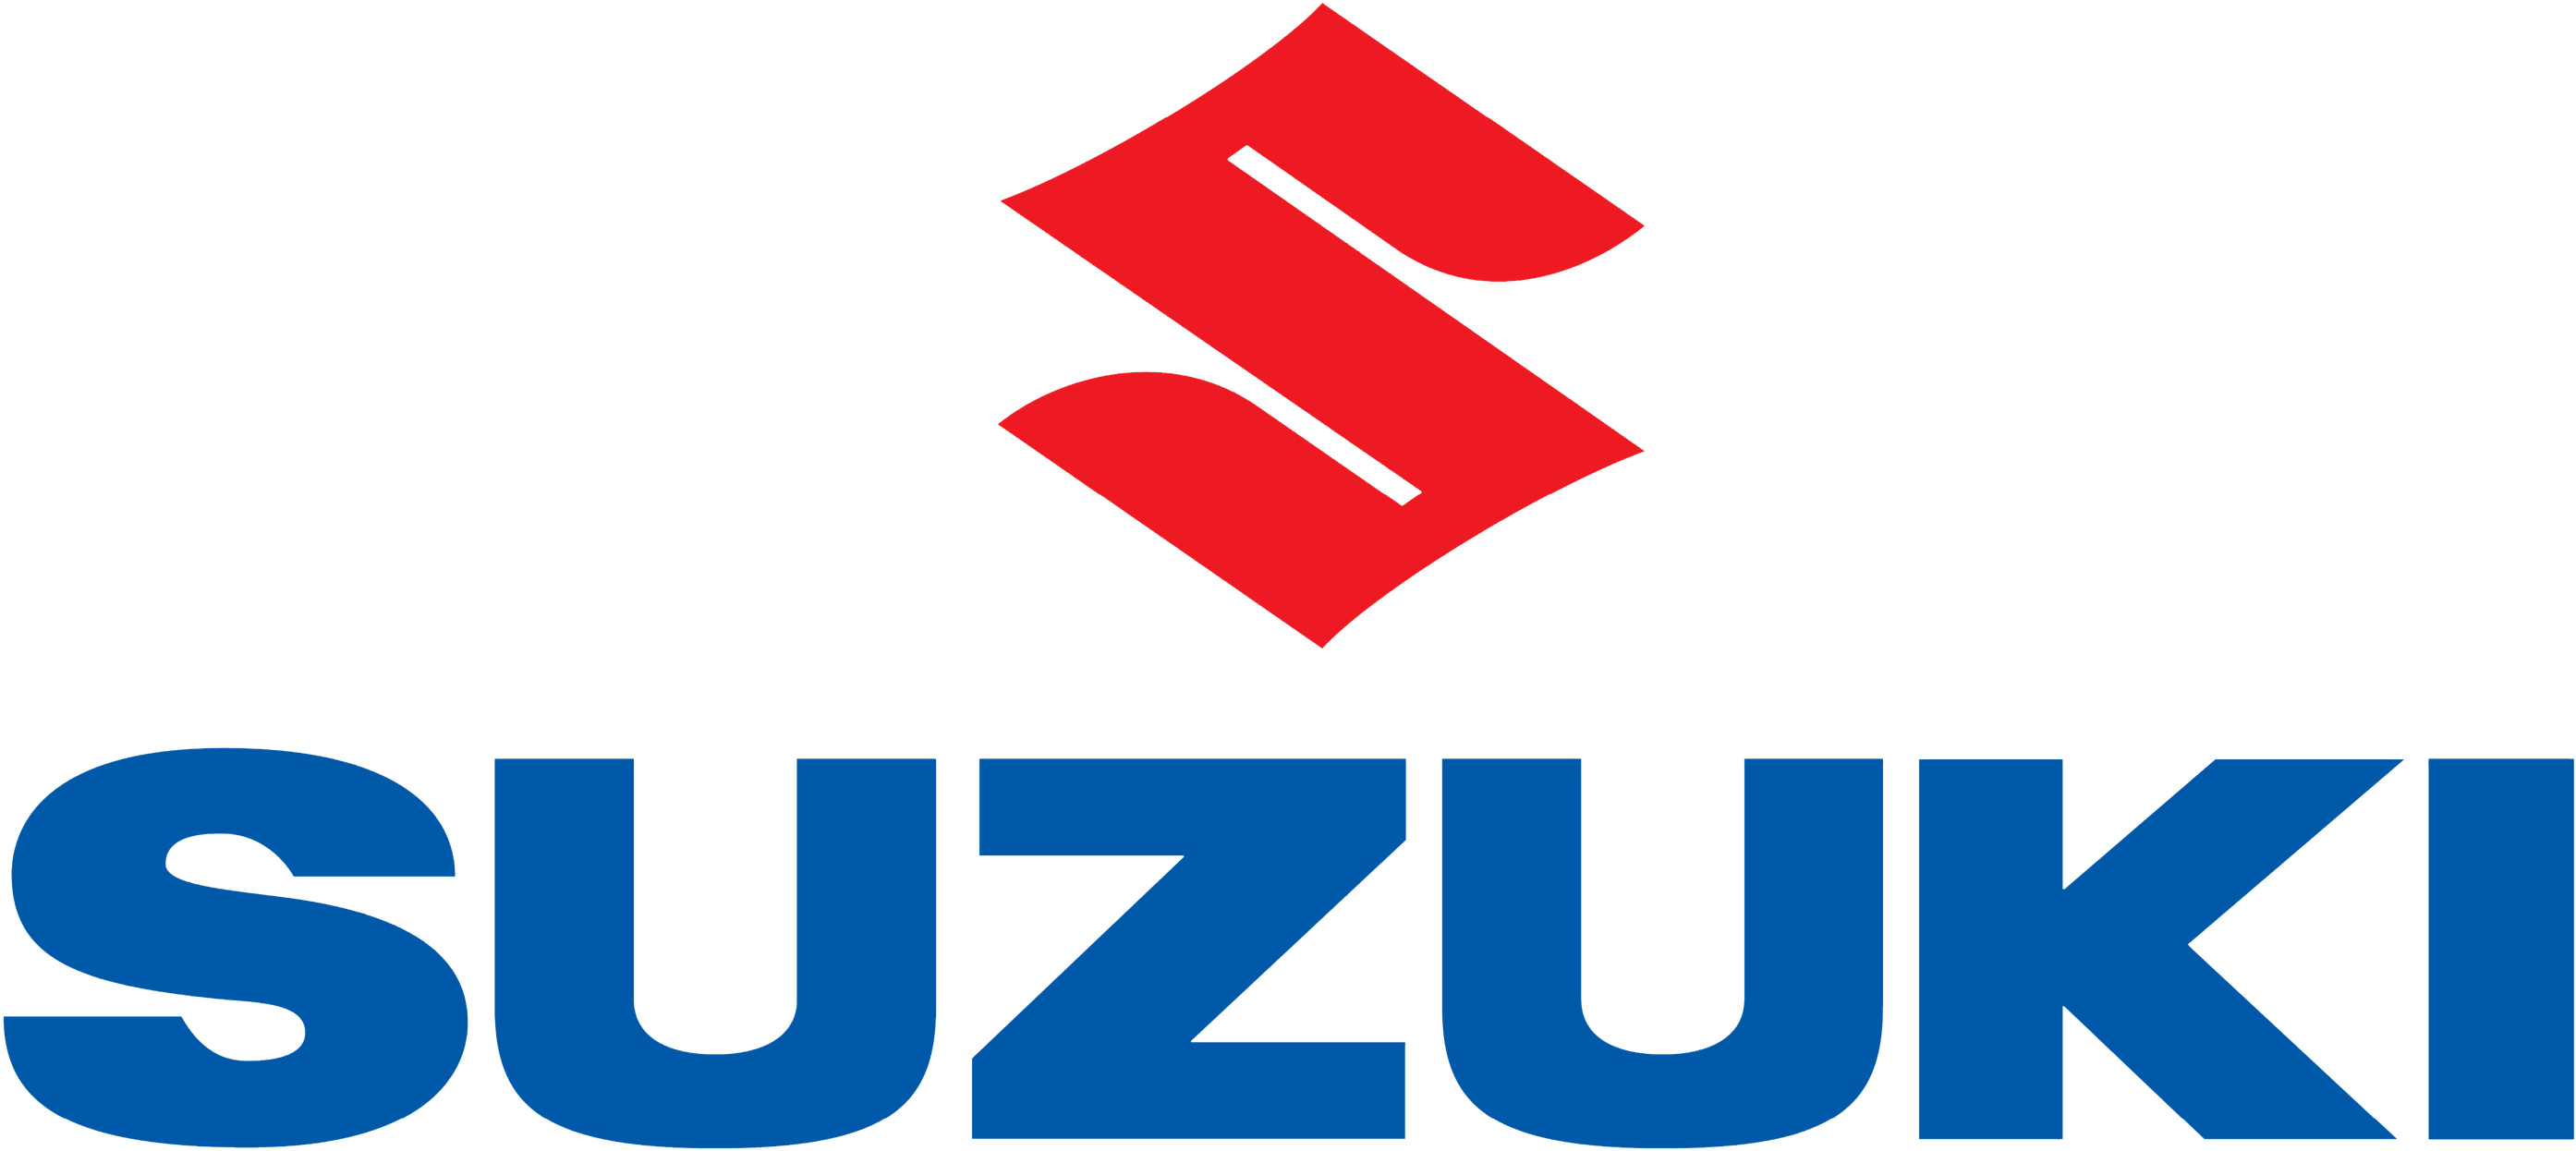 SUZUKI symbol PNG foto